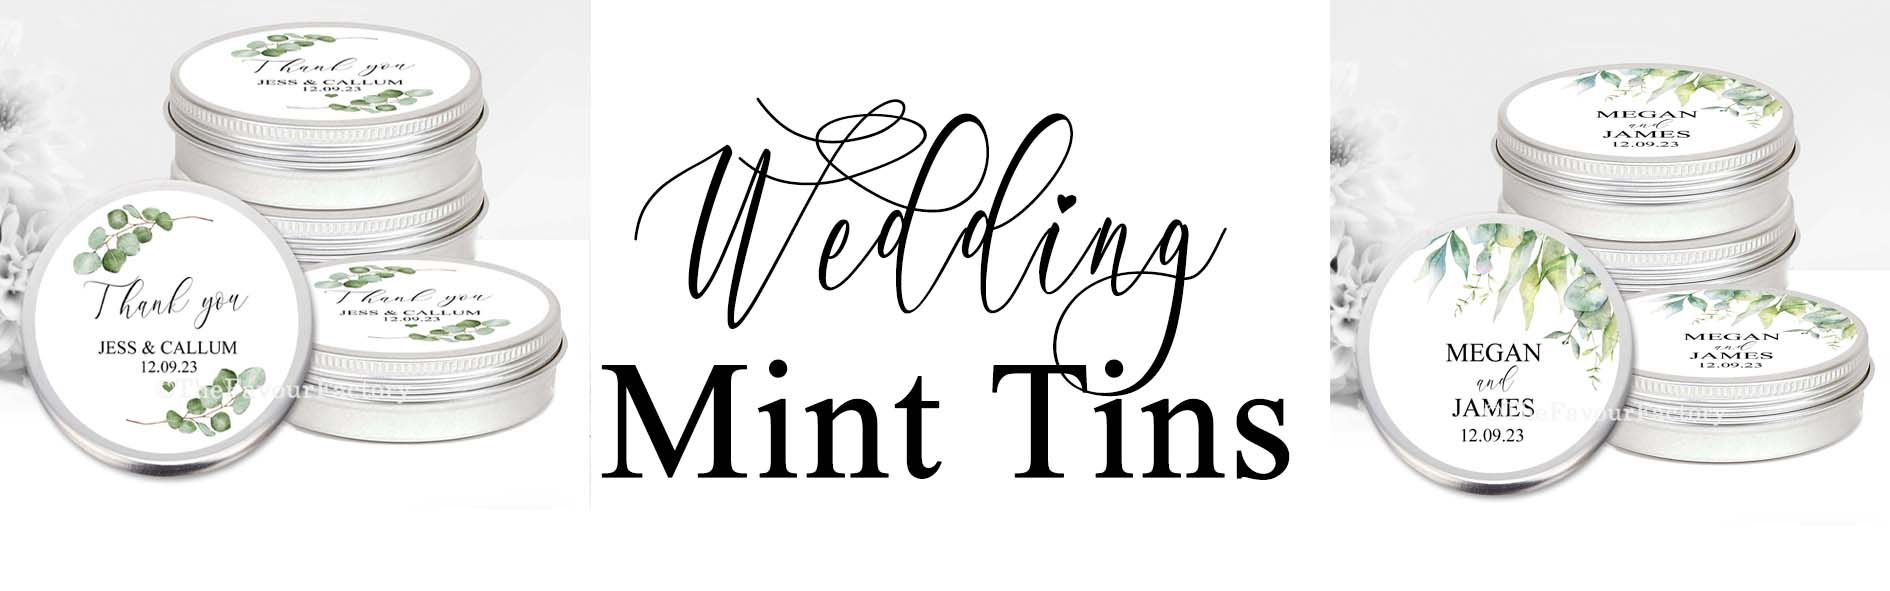 wedding mint tins banner copy